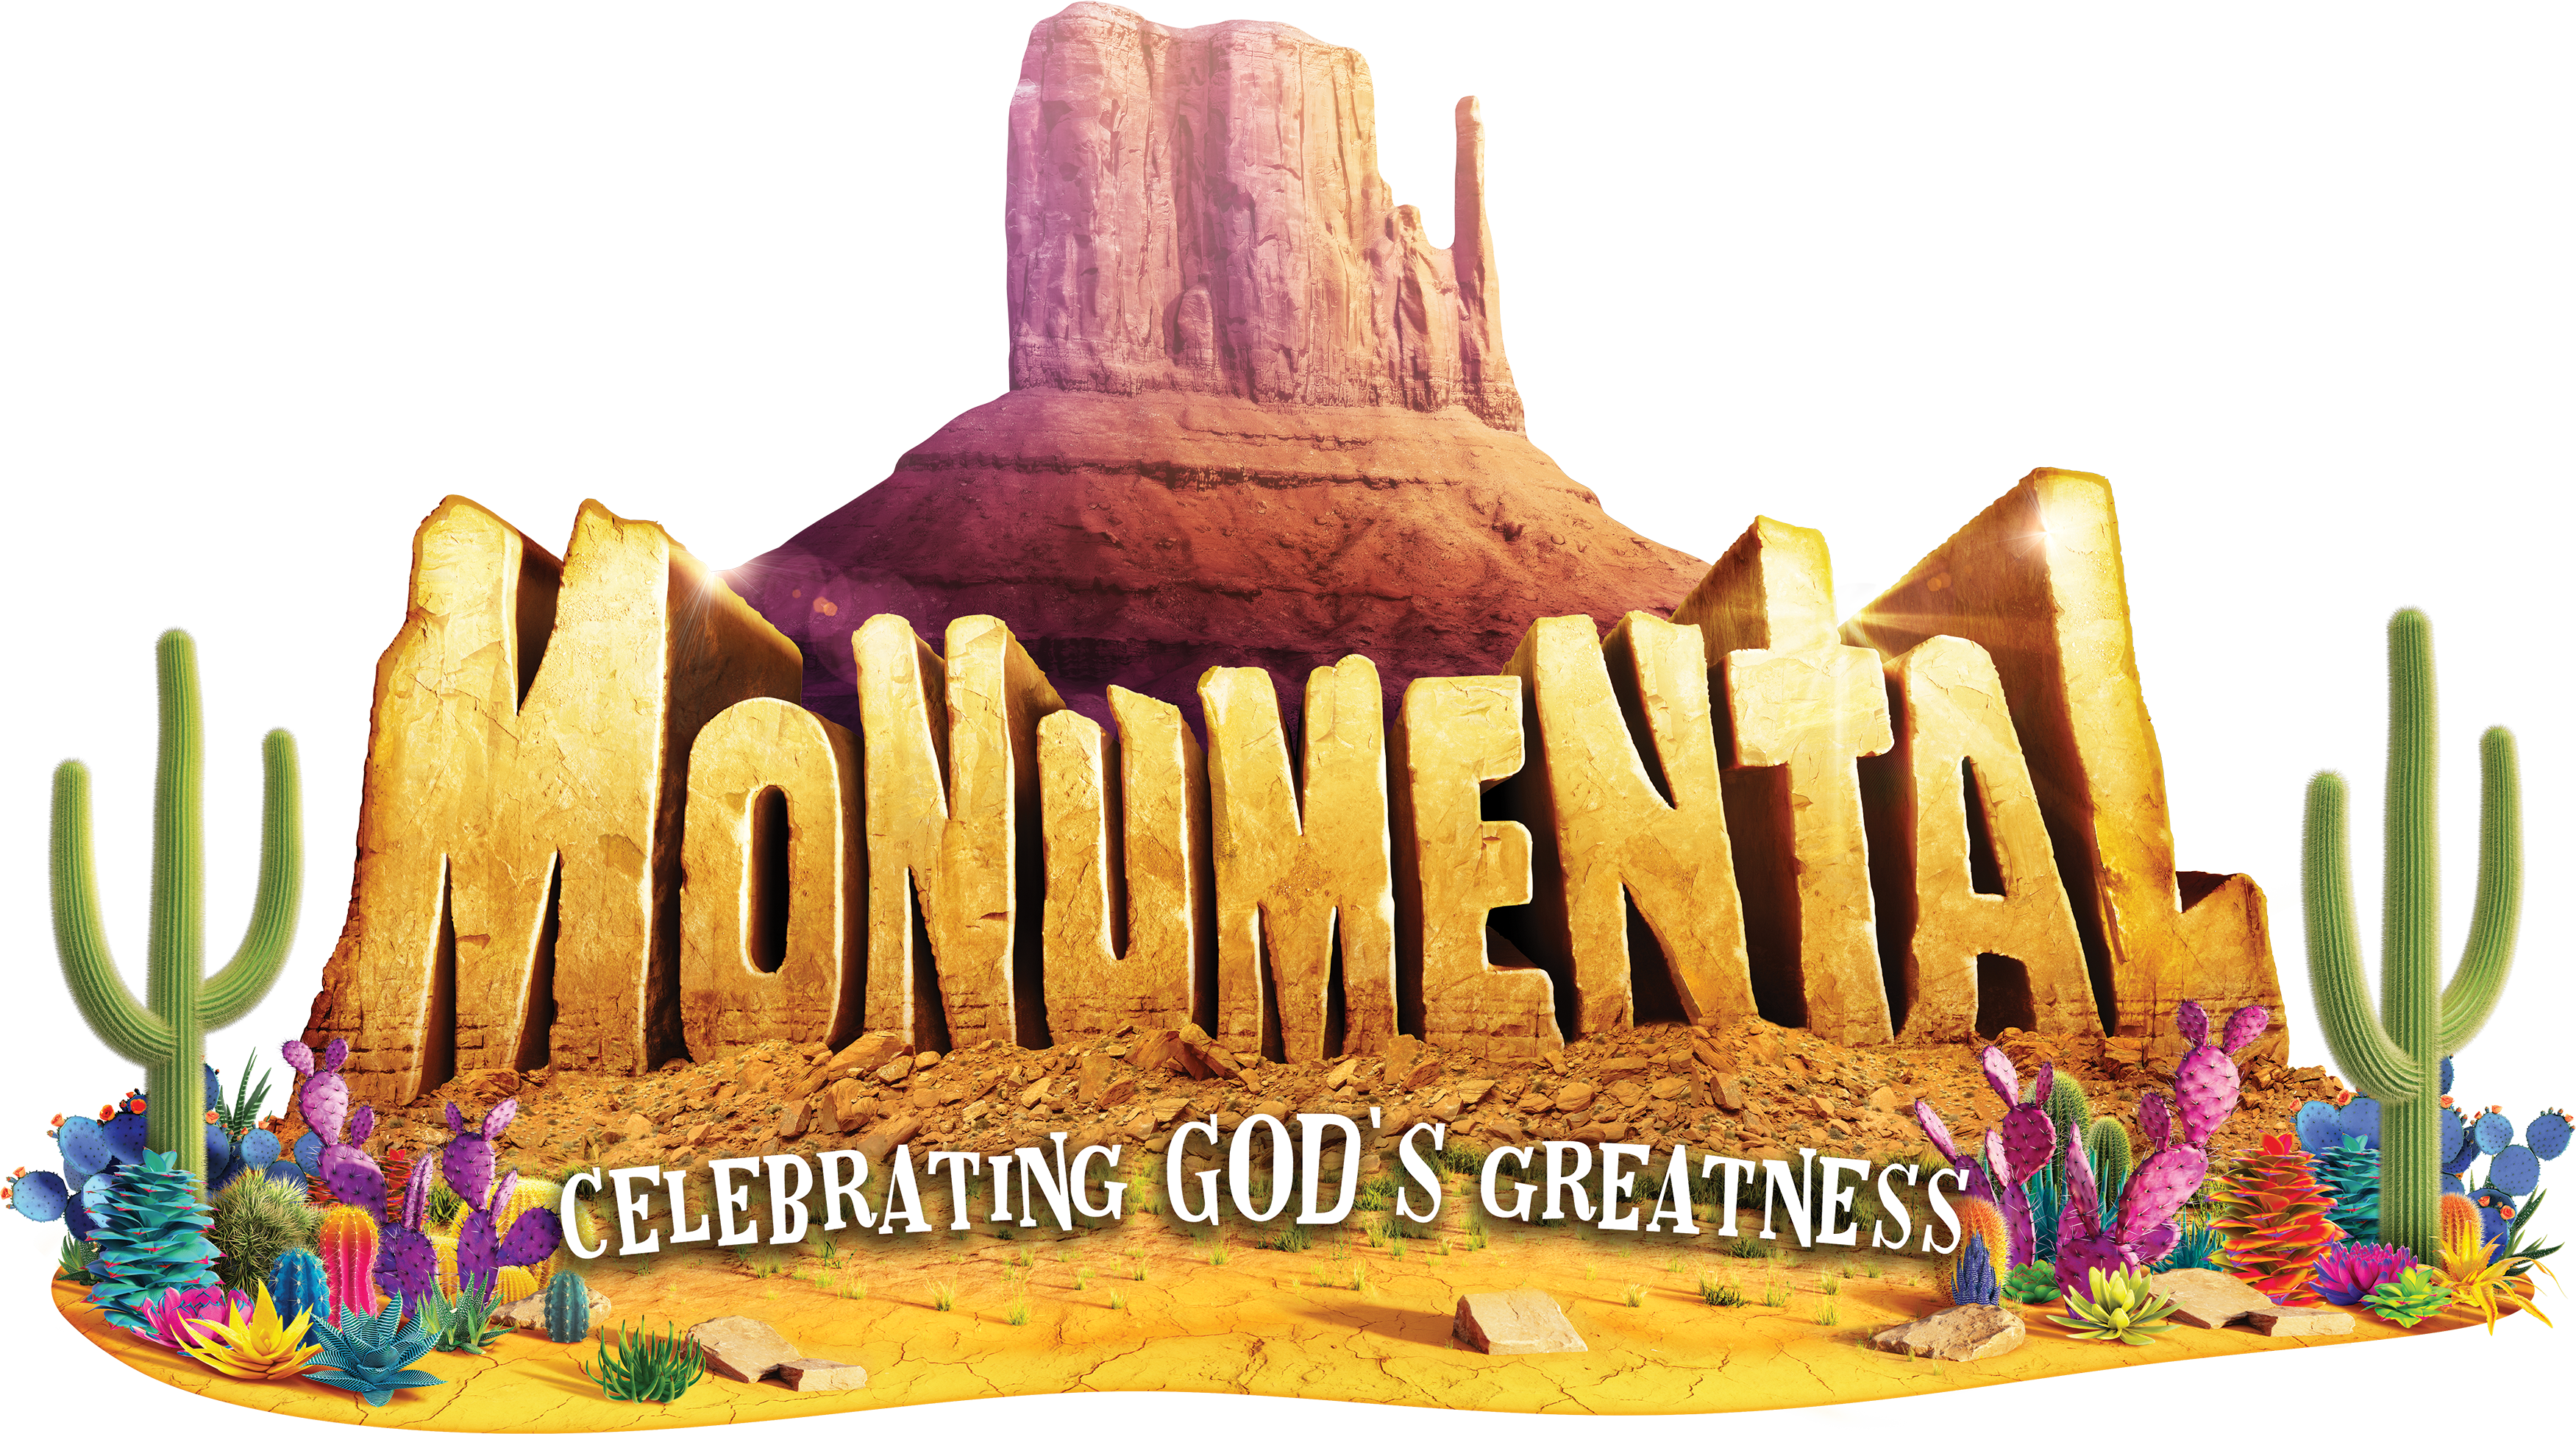 Monumental Logo